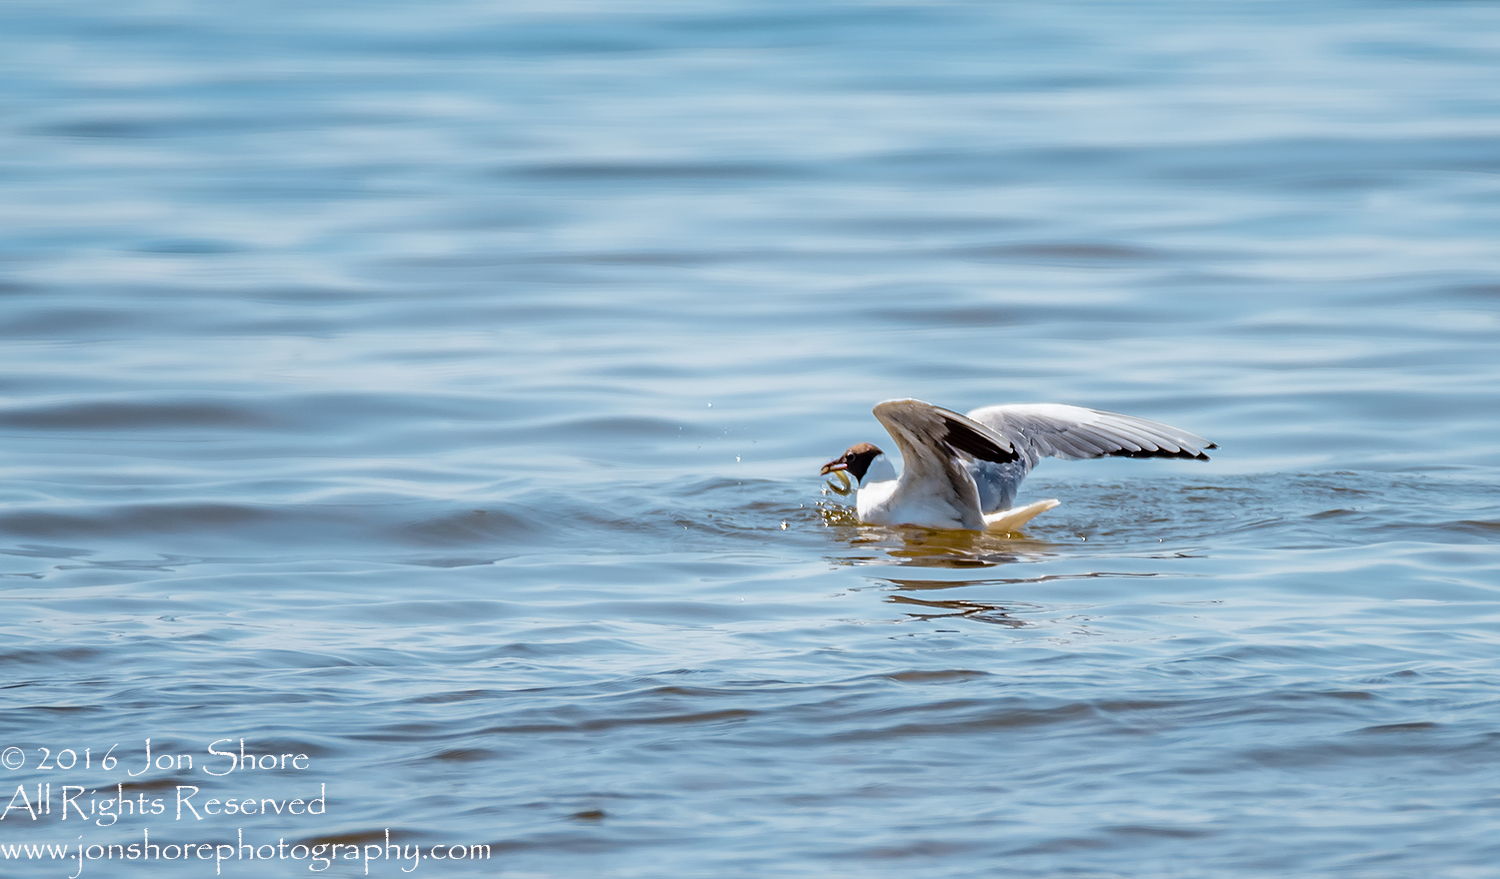 Black Headed Seagull Fishing. Tamron 600mm lens